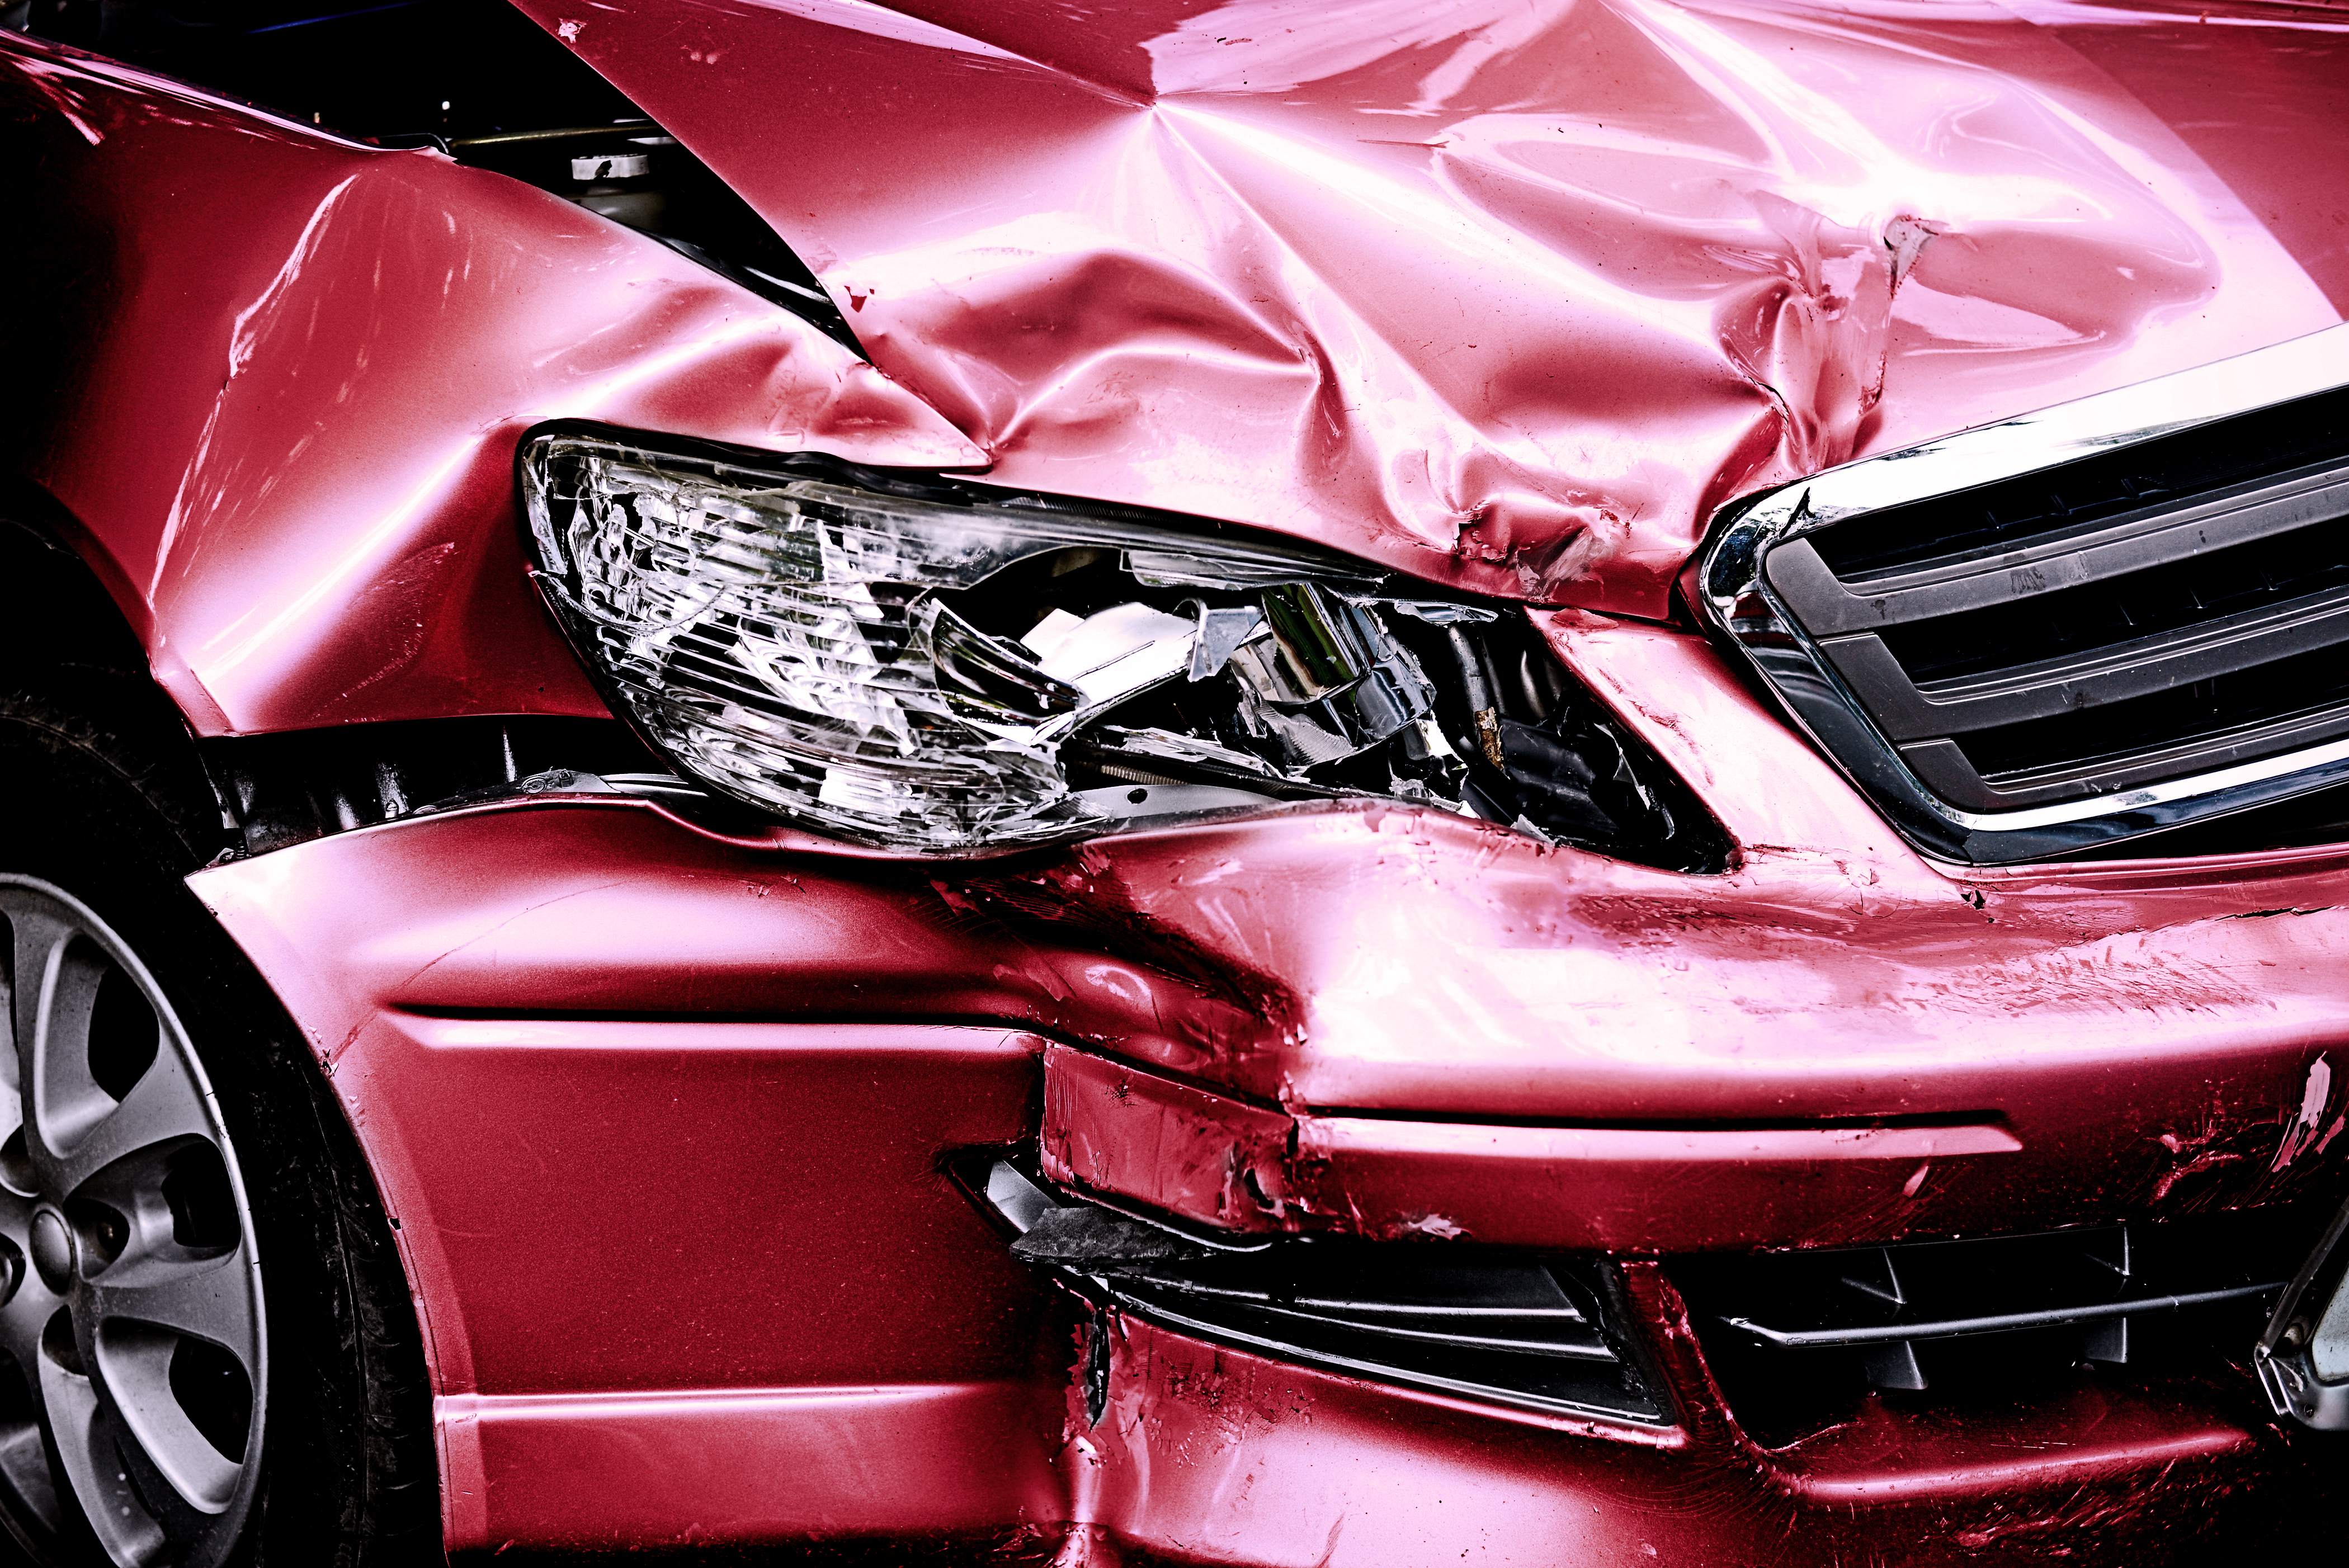 A damaged car | Source: Shutterstock